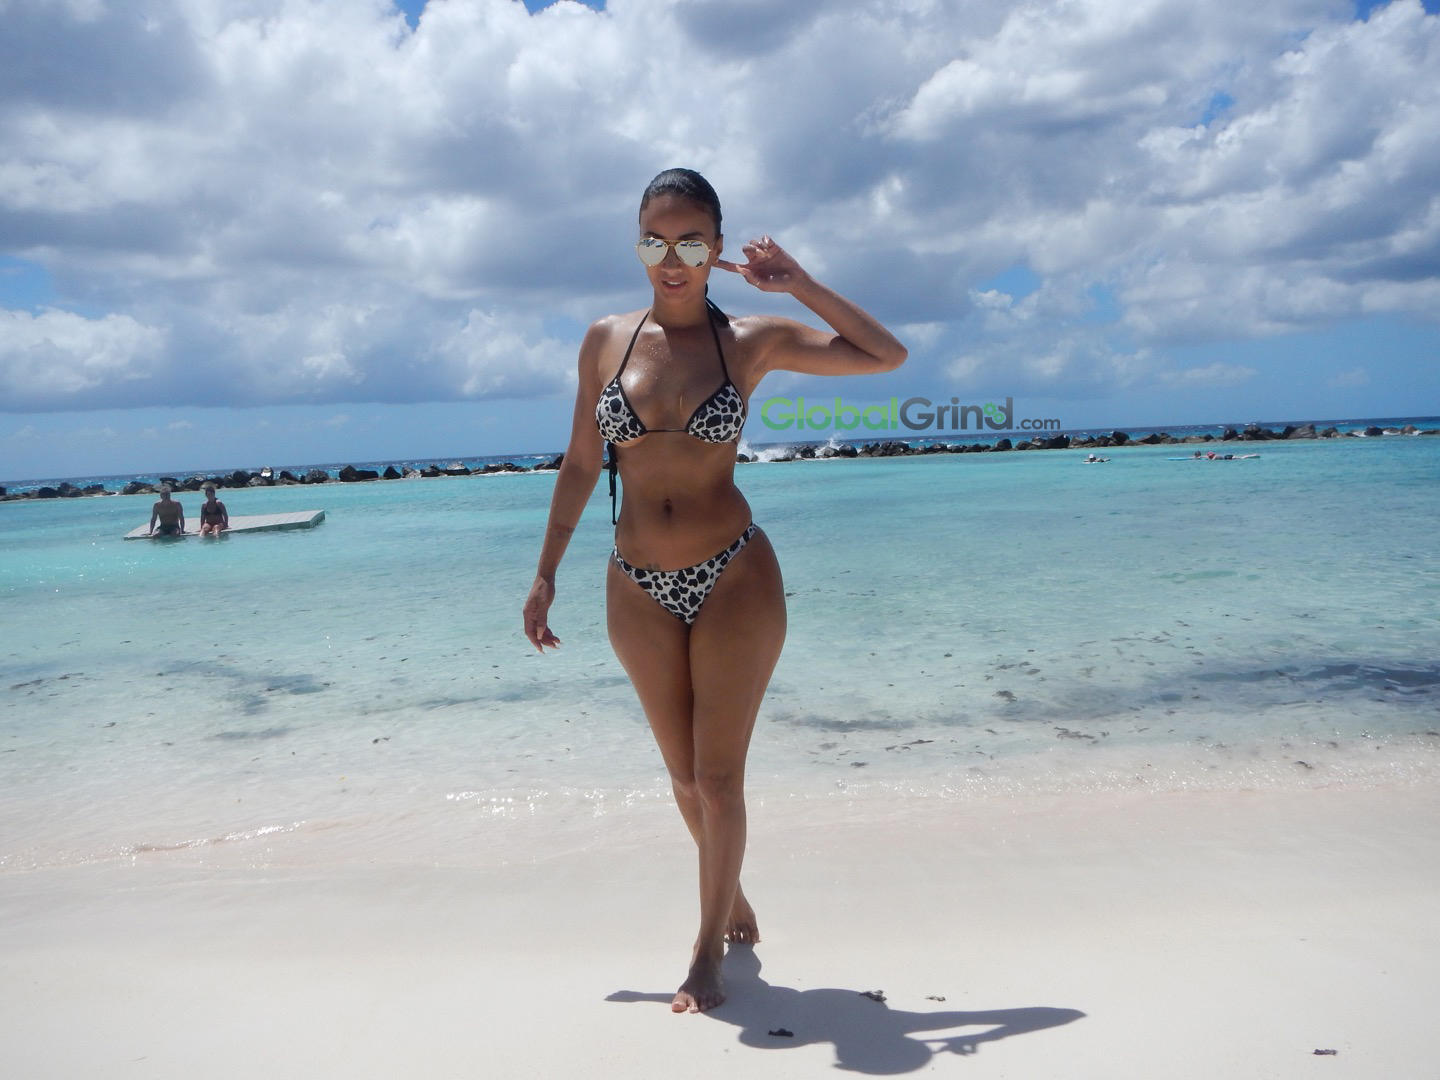 Draya Michele In Aruba